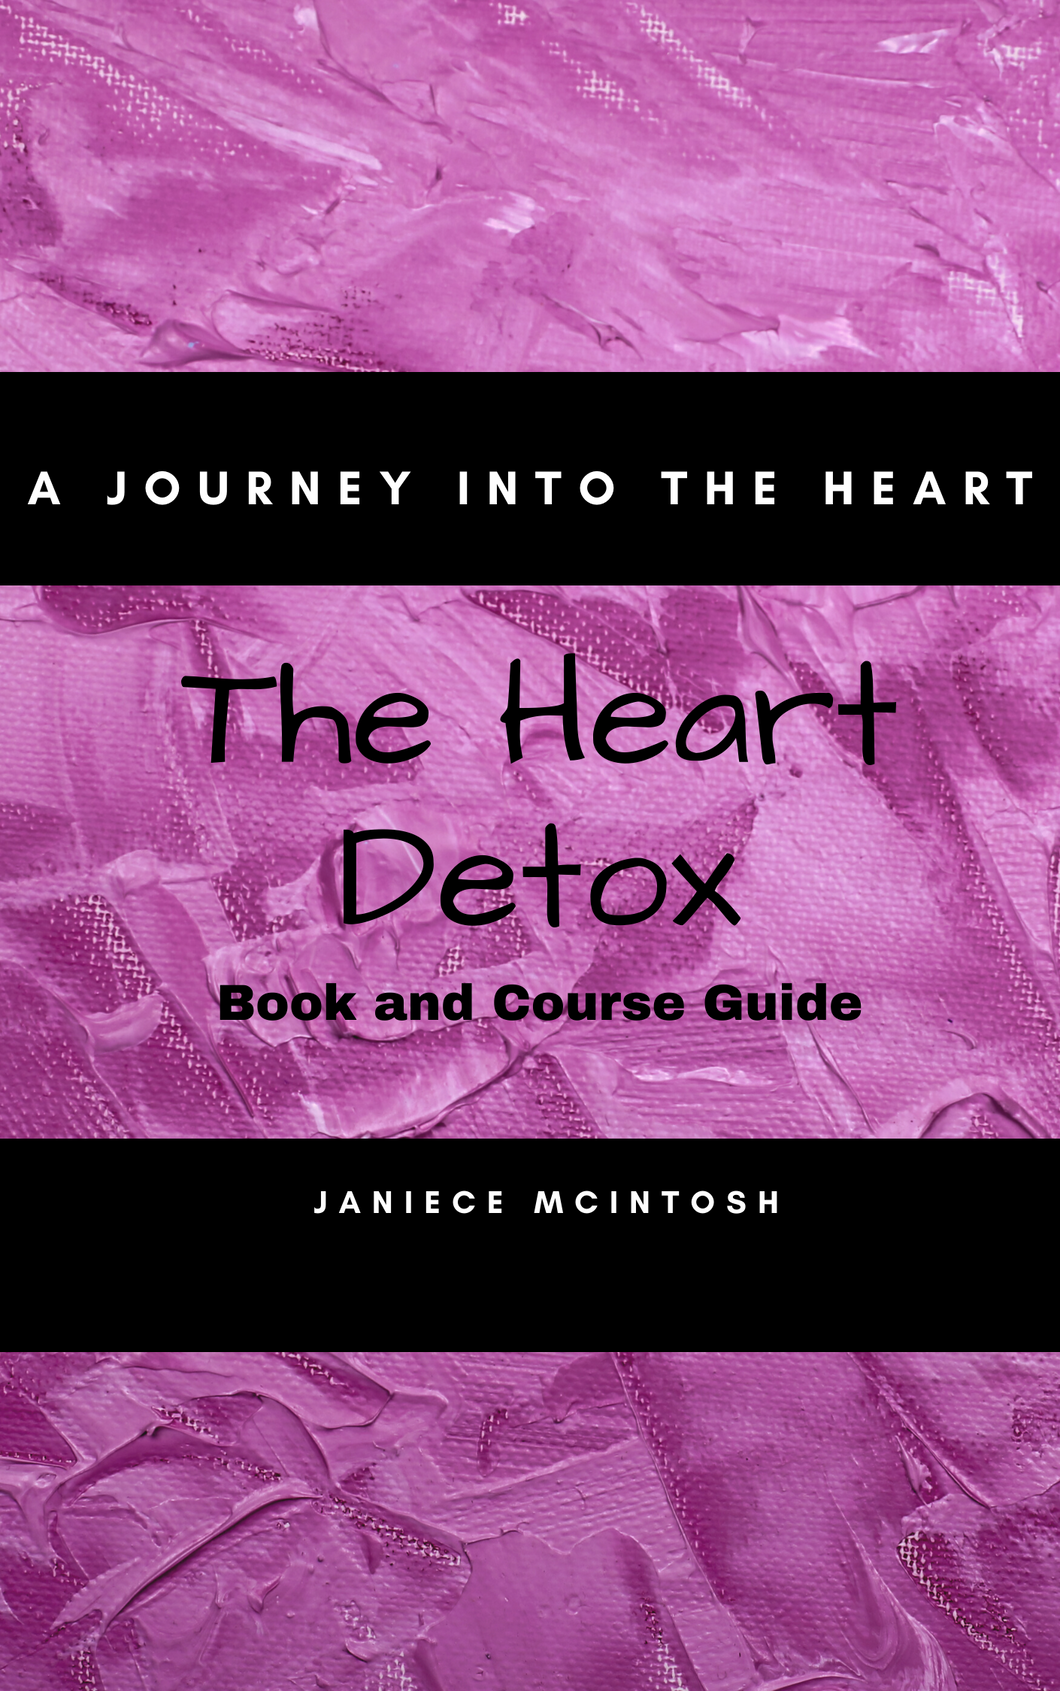 The Heart Detox by Janiece McIntosh